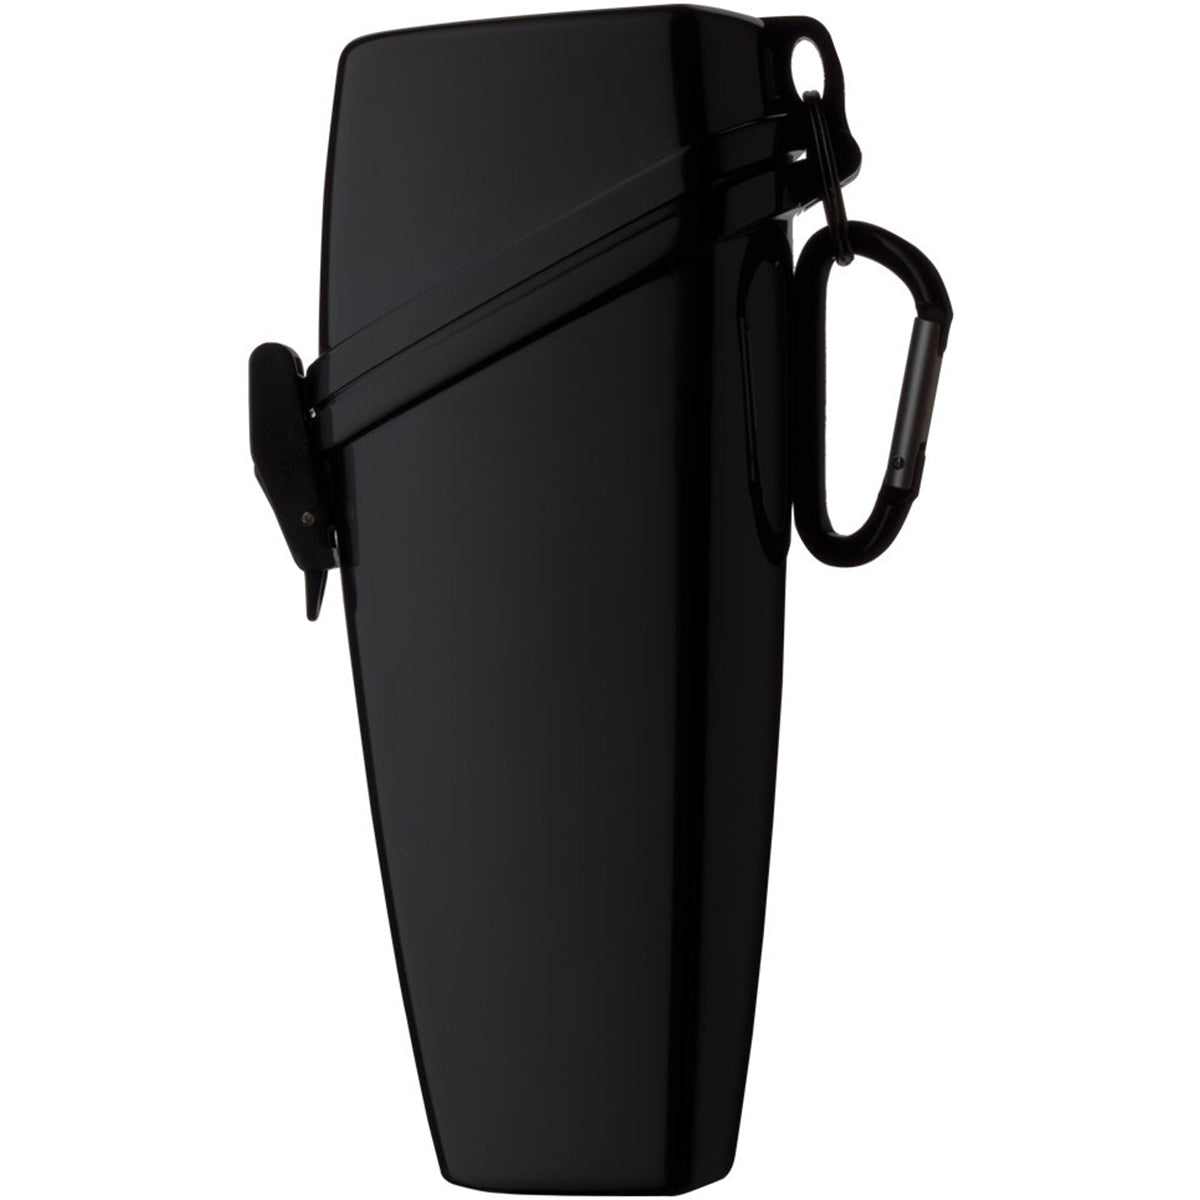 Witz The Wrapper Lightweight Waterproof Eyeglass Case with Carabiner - Black Witz